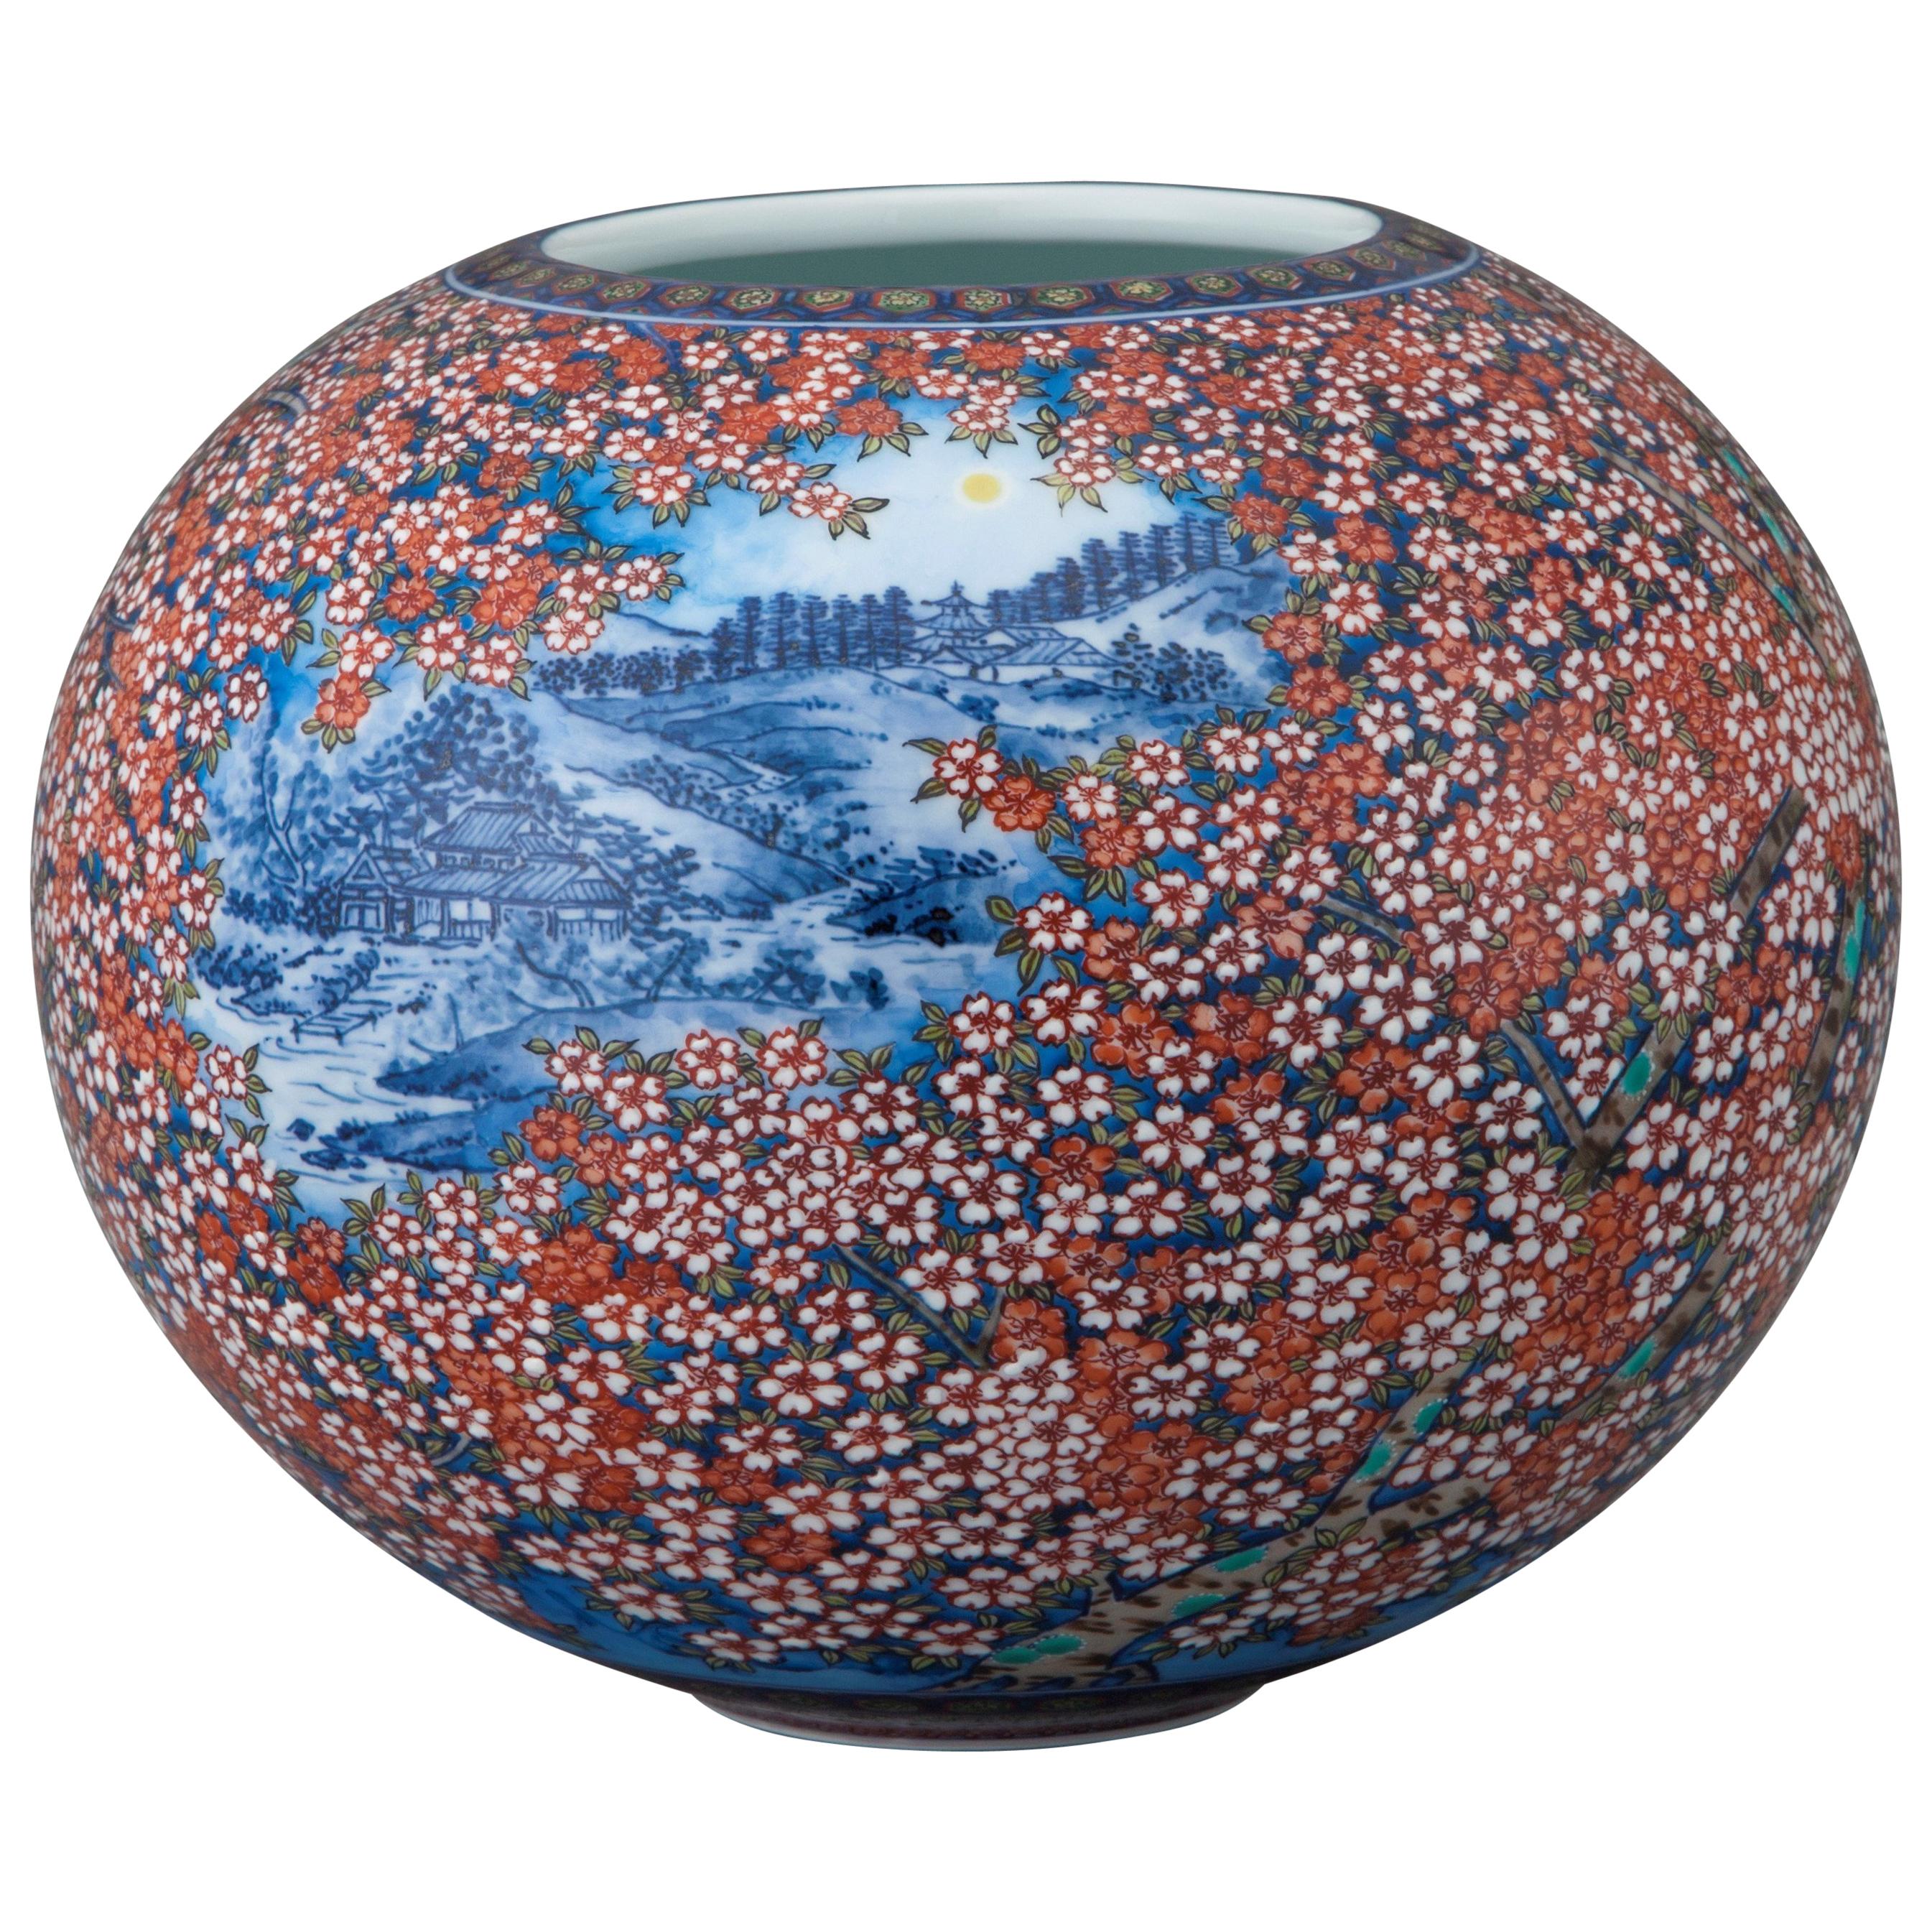 Japanese Imari Hand Painted Decorative Porcelain Vase by Master Artist, 2018